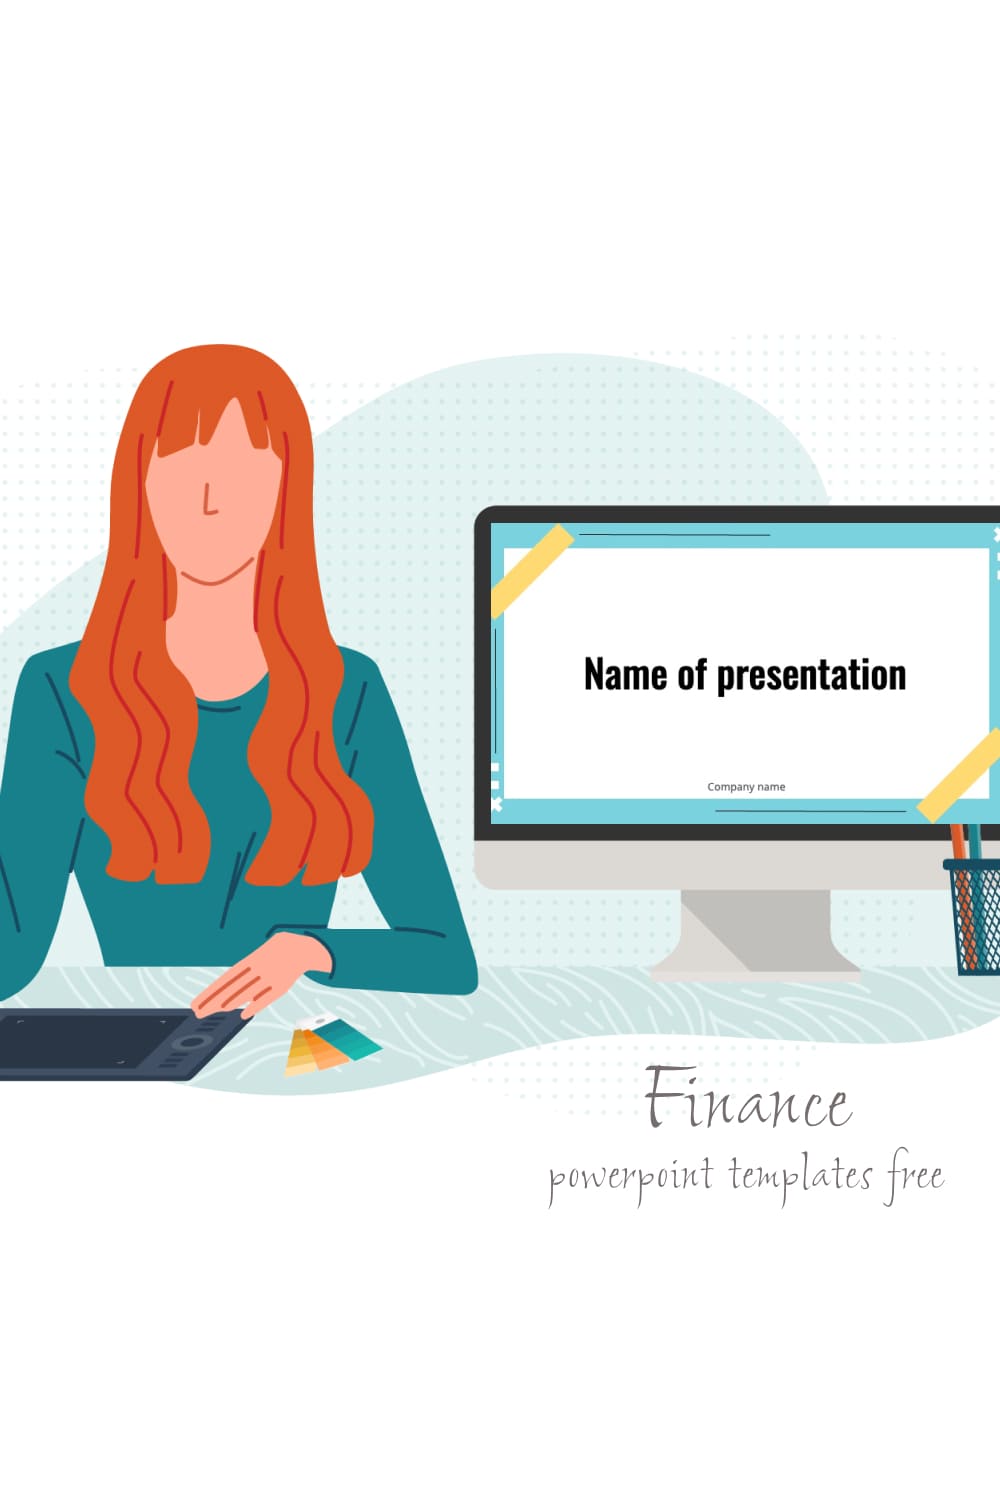 Pinterest Finance Powerpoint Templates Free.